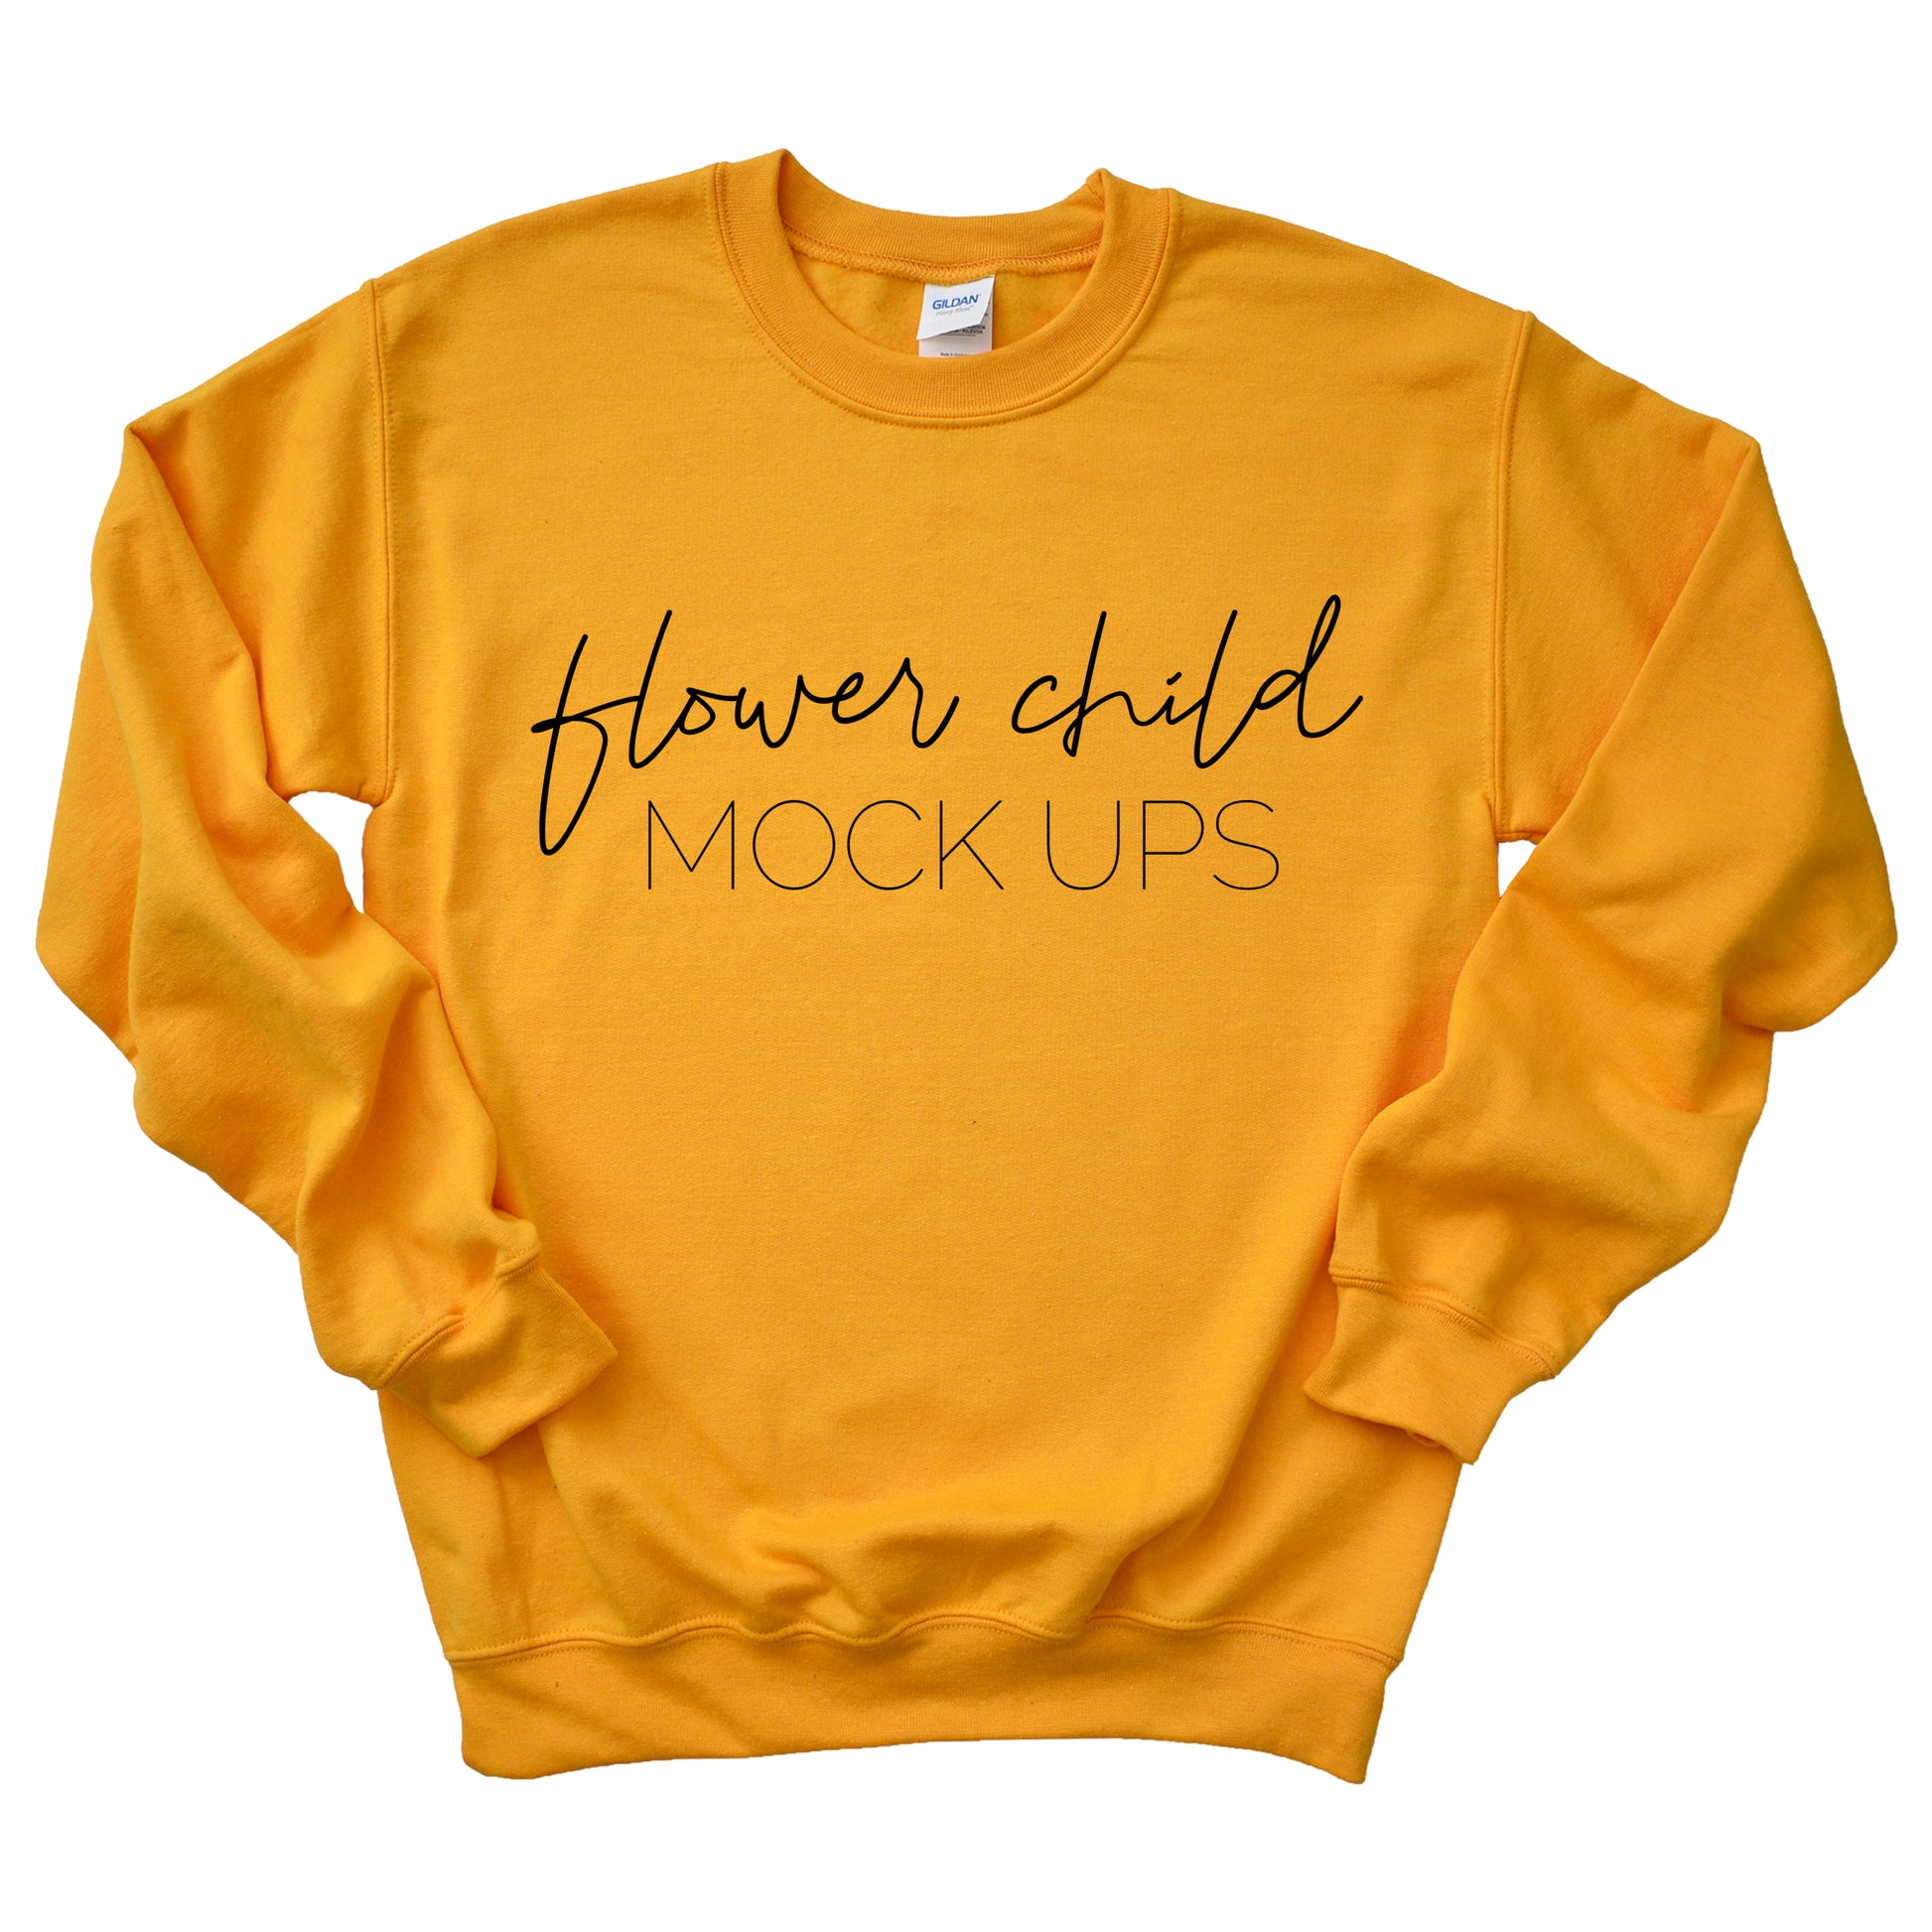 Gildan 18000 Gold Sweatshirt Mockup - flowerchildmockups